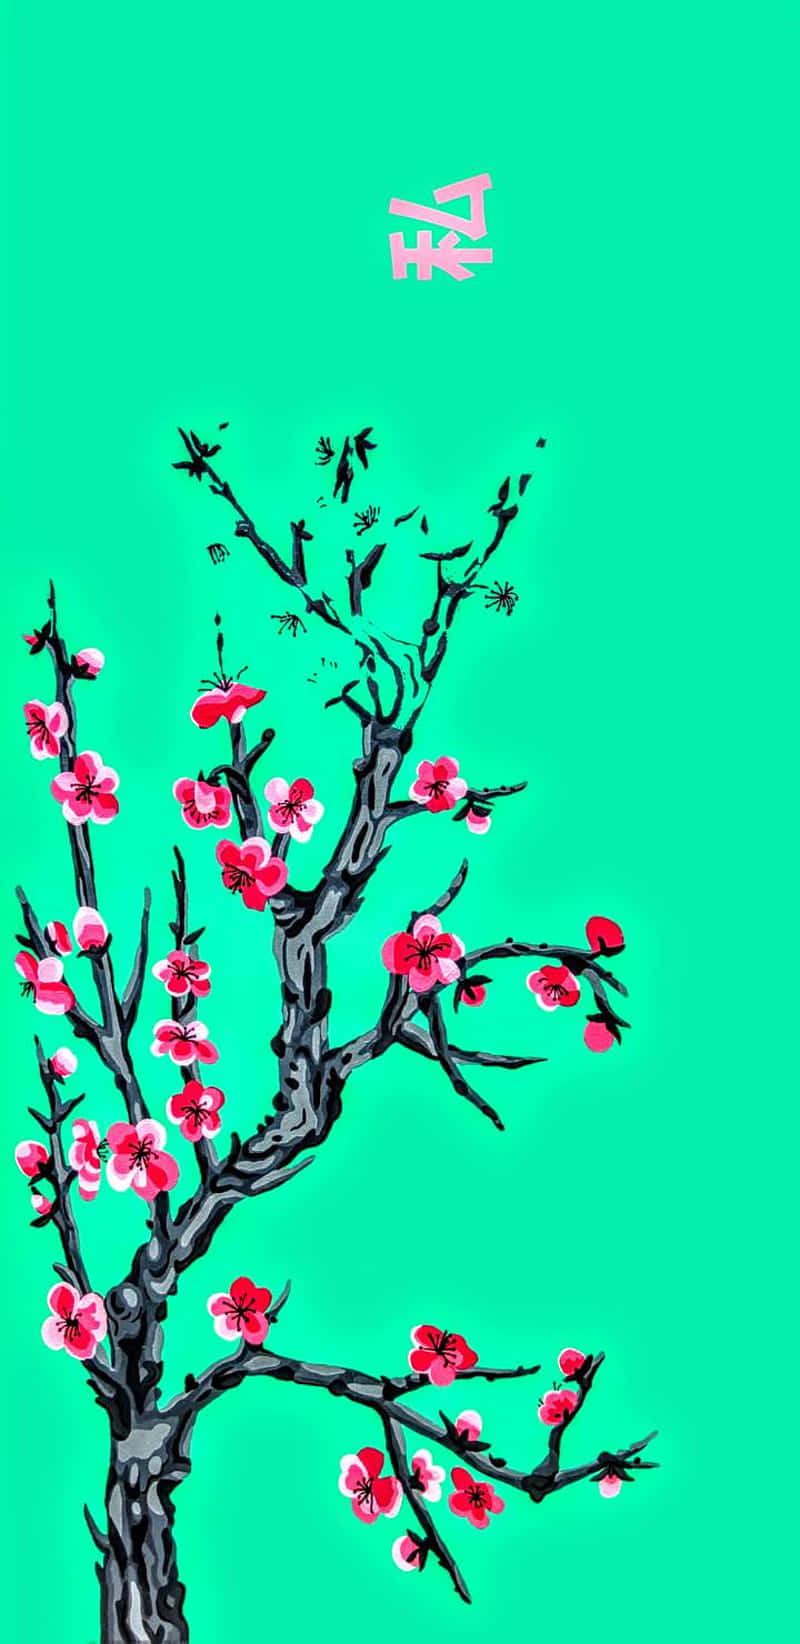 Enmålning Av Ett Träd Med Rosa Blommor (as A Recommendation For A Computer Or Mobile Wallpaper) Wallpaper